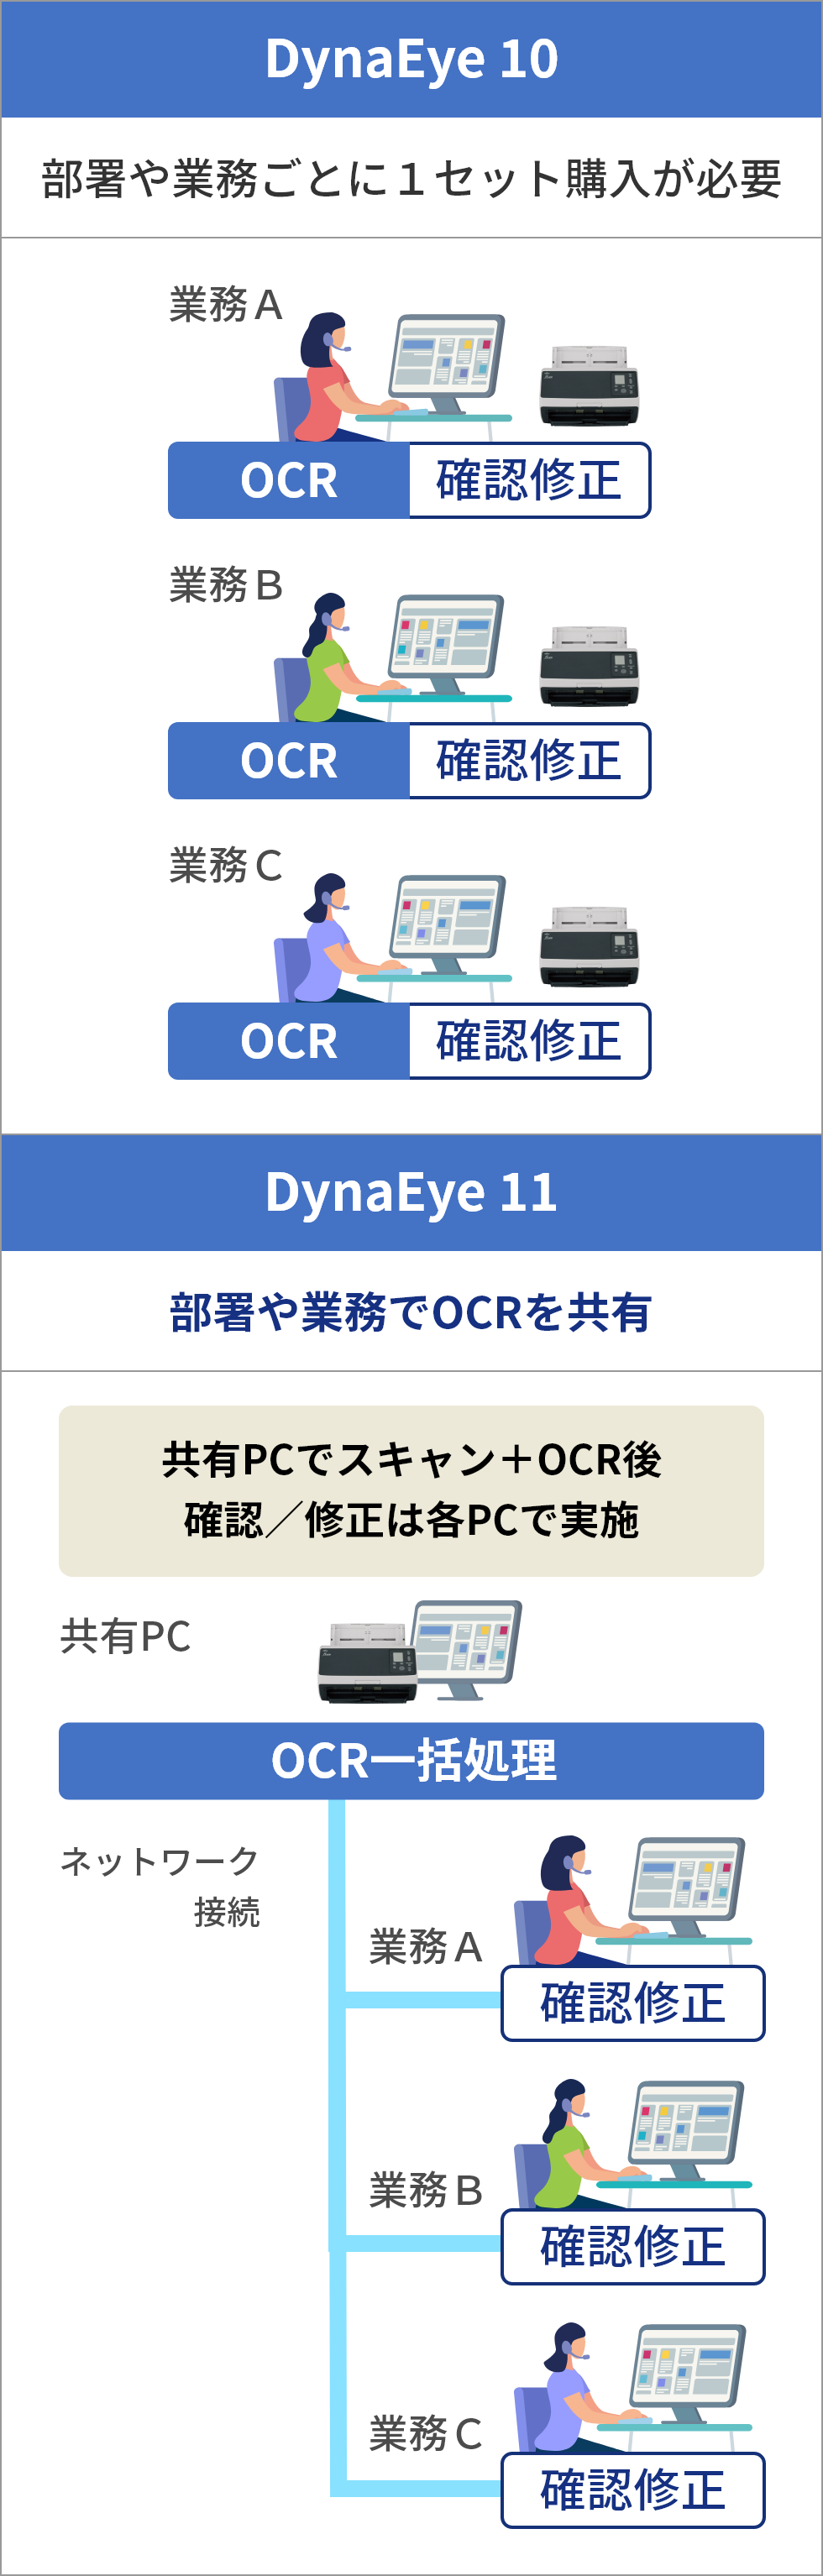 OCR結果の確認・修正作業を複数名で確認できるソフトウェアライセンスを利用した業務イメージ